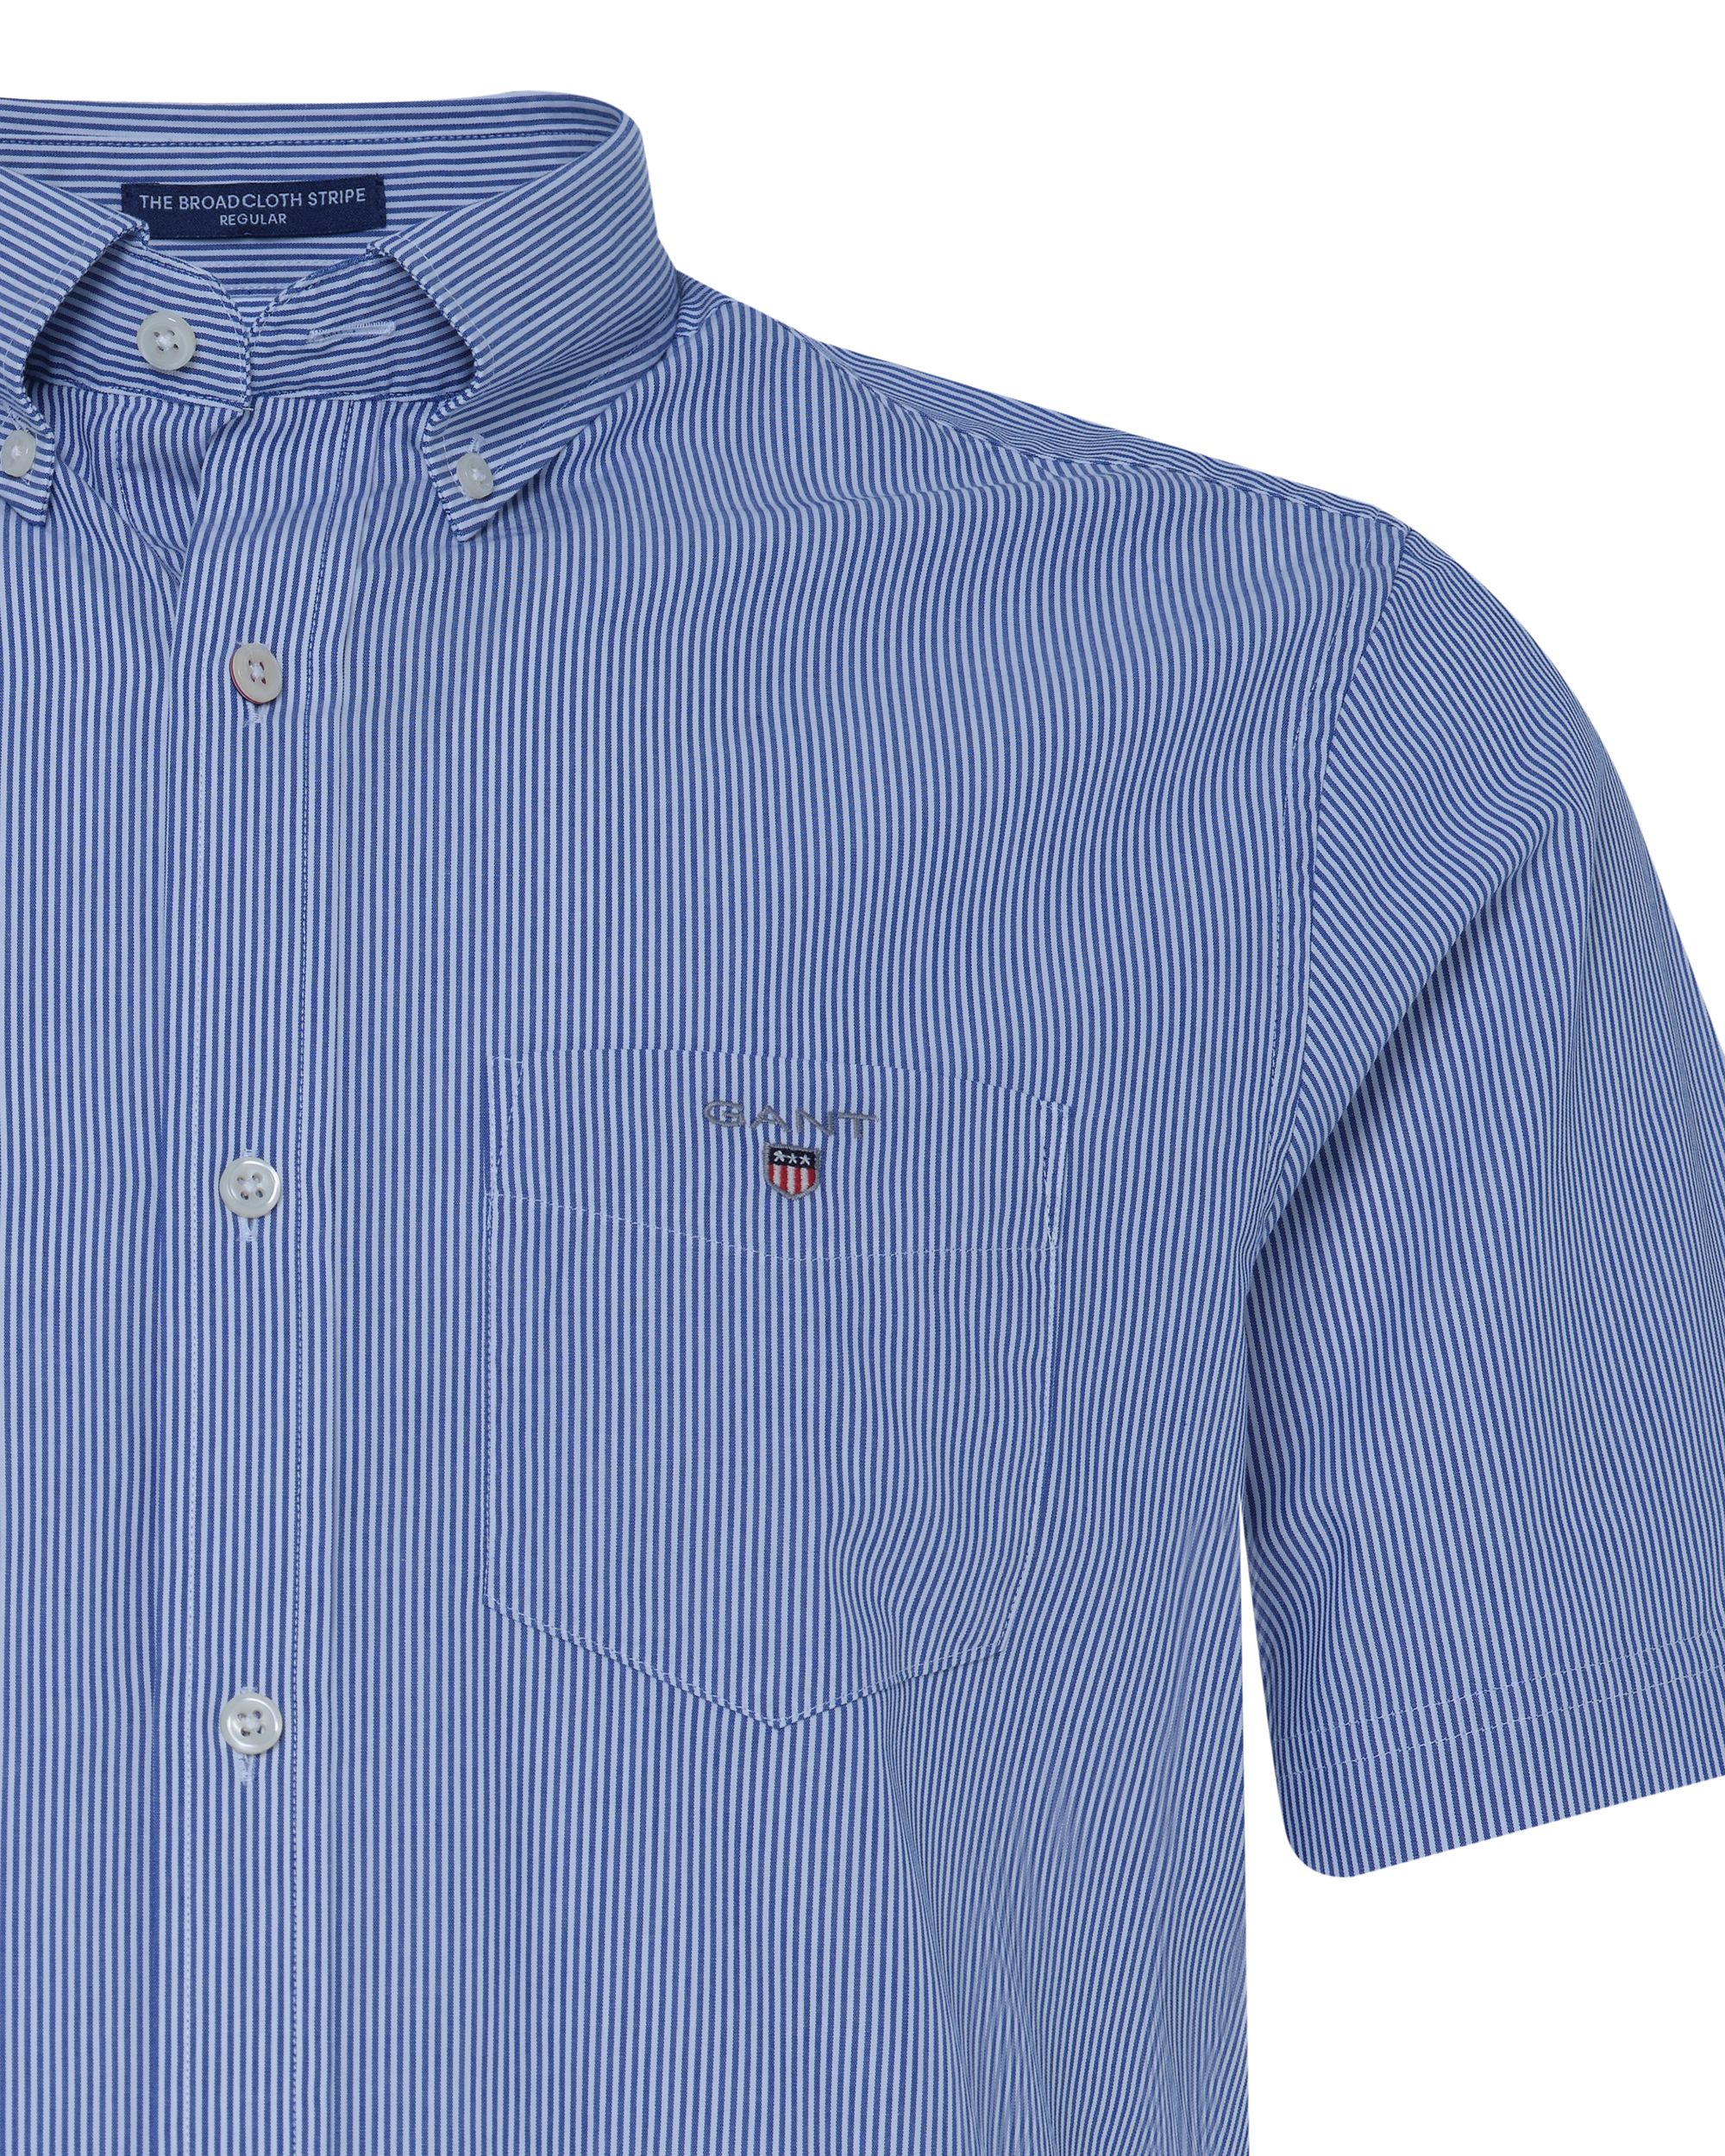 GANT Casual Overhemd KM Blauw streep 081486-001-L